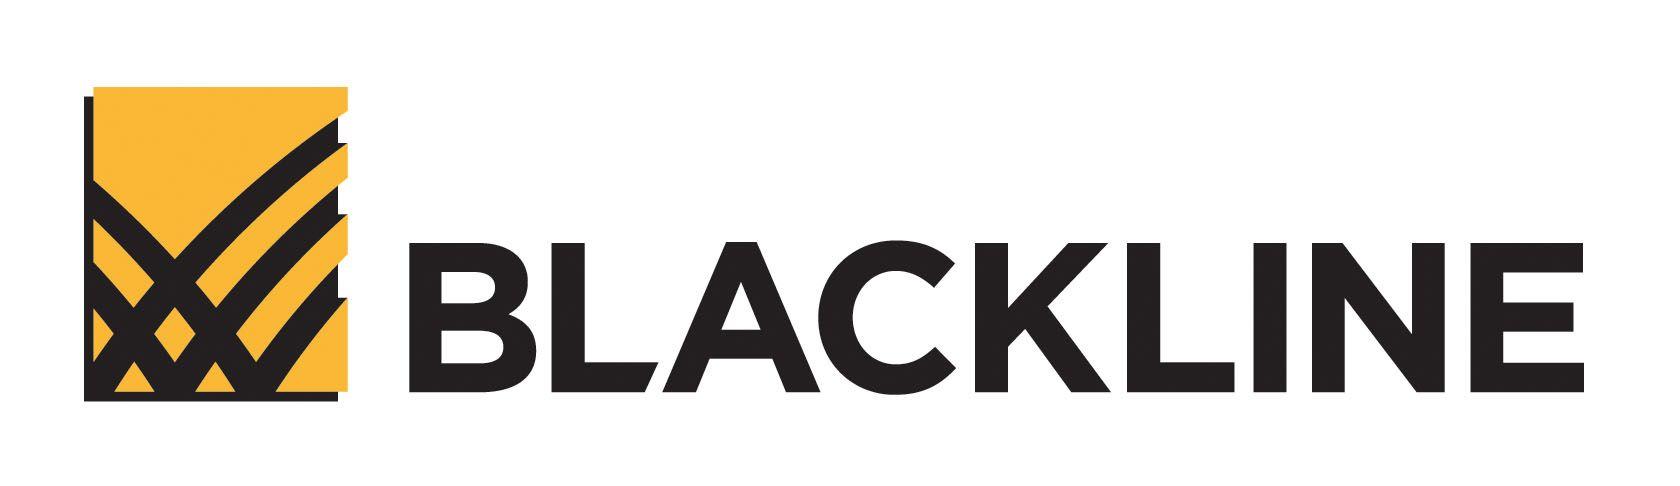 Black Line Logo - BlackLine logo | RealWire RealResource